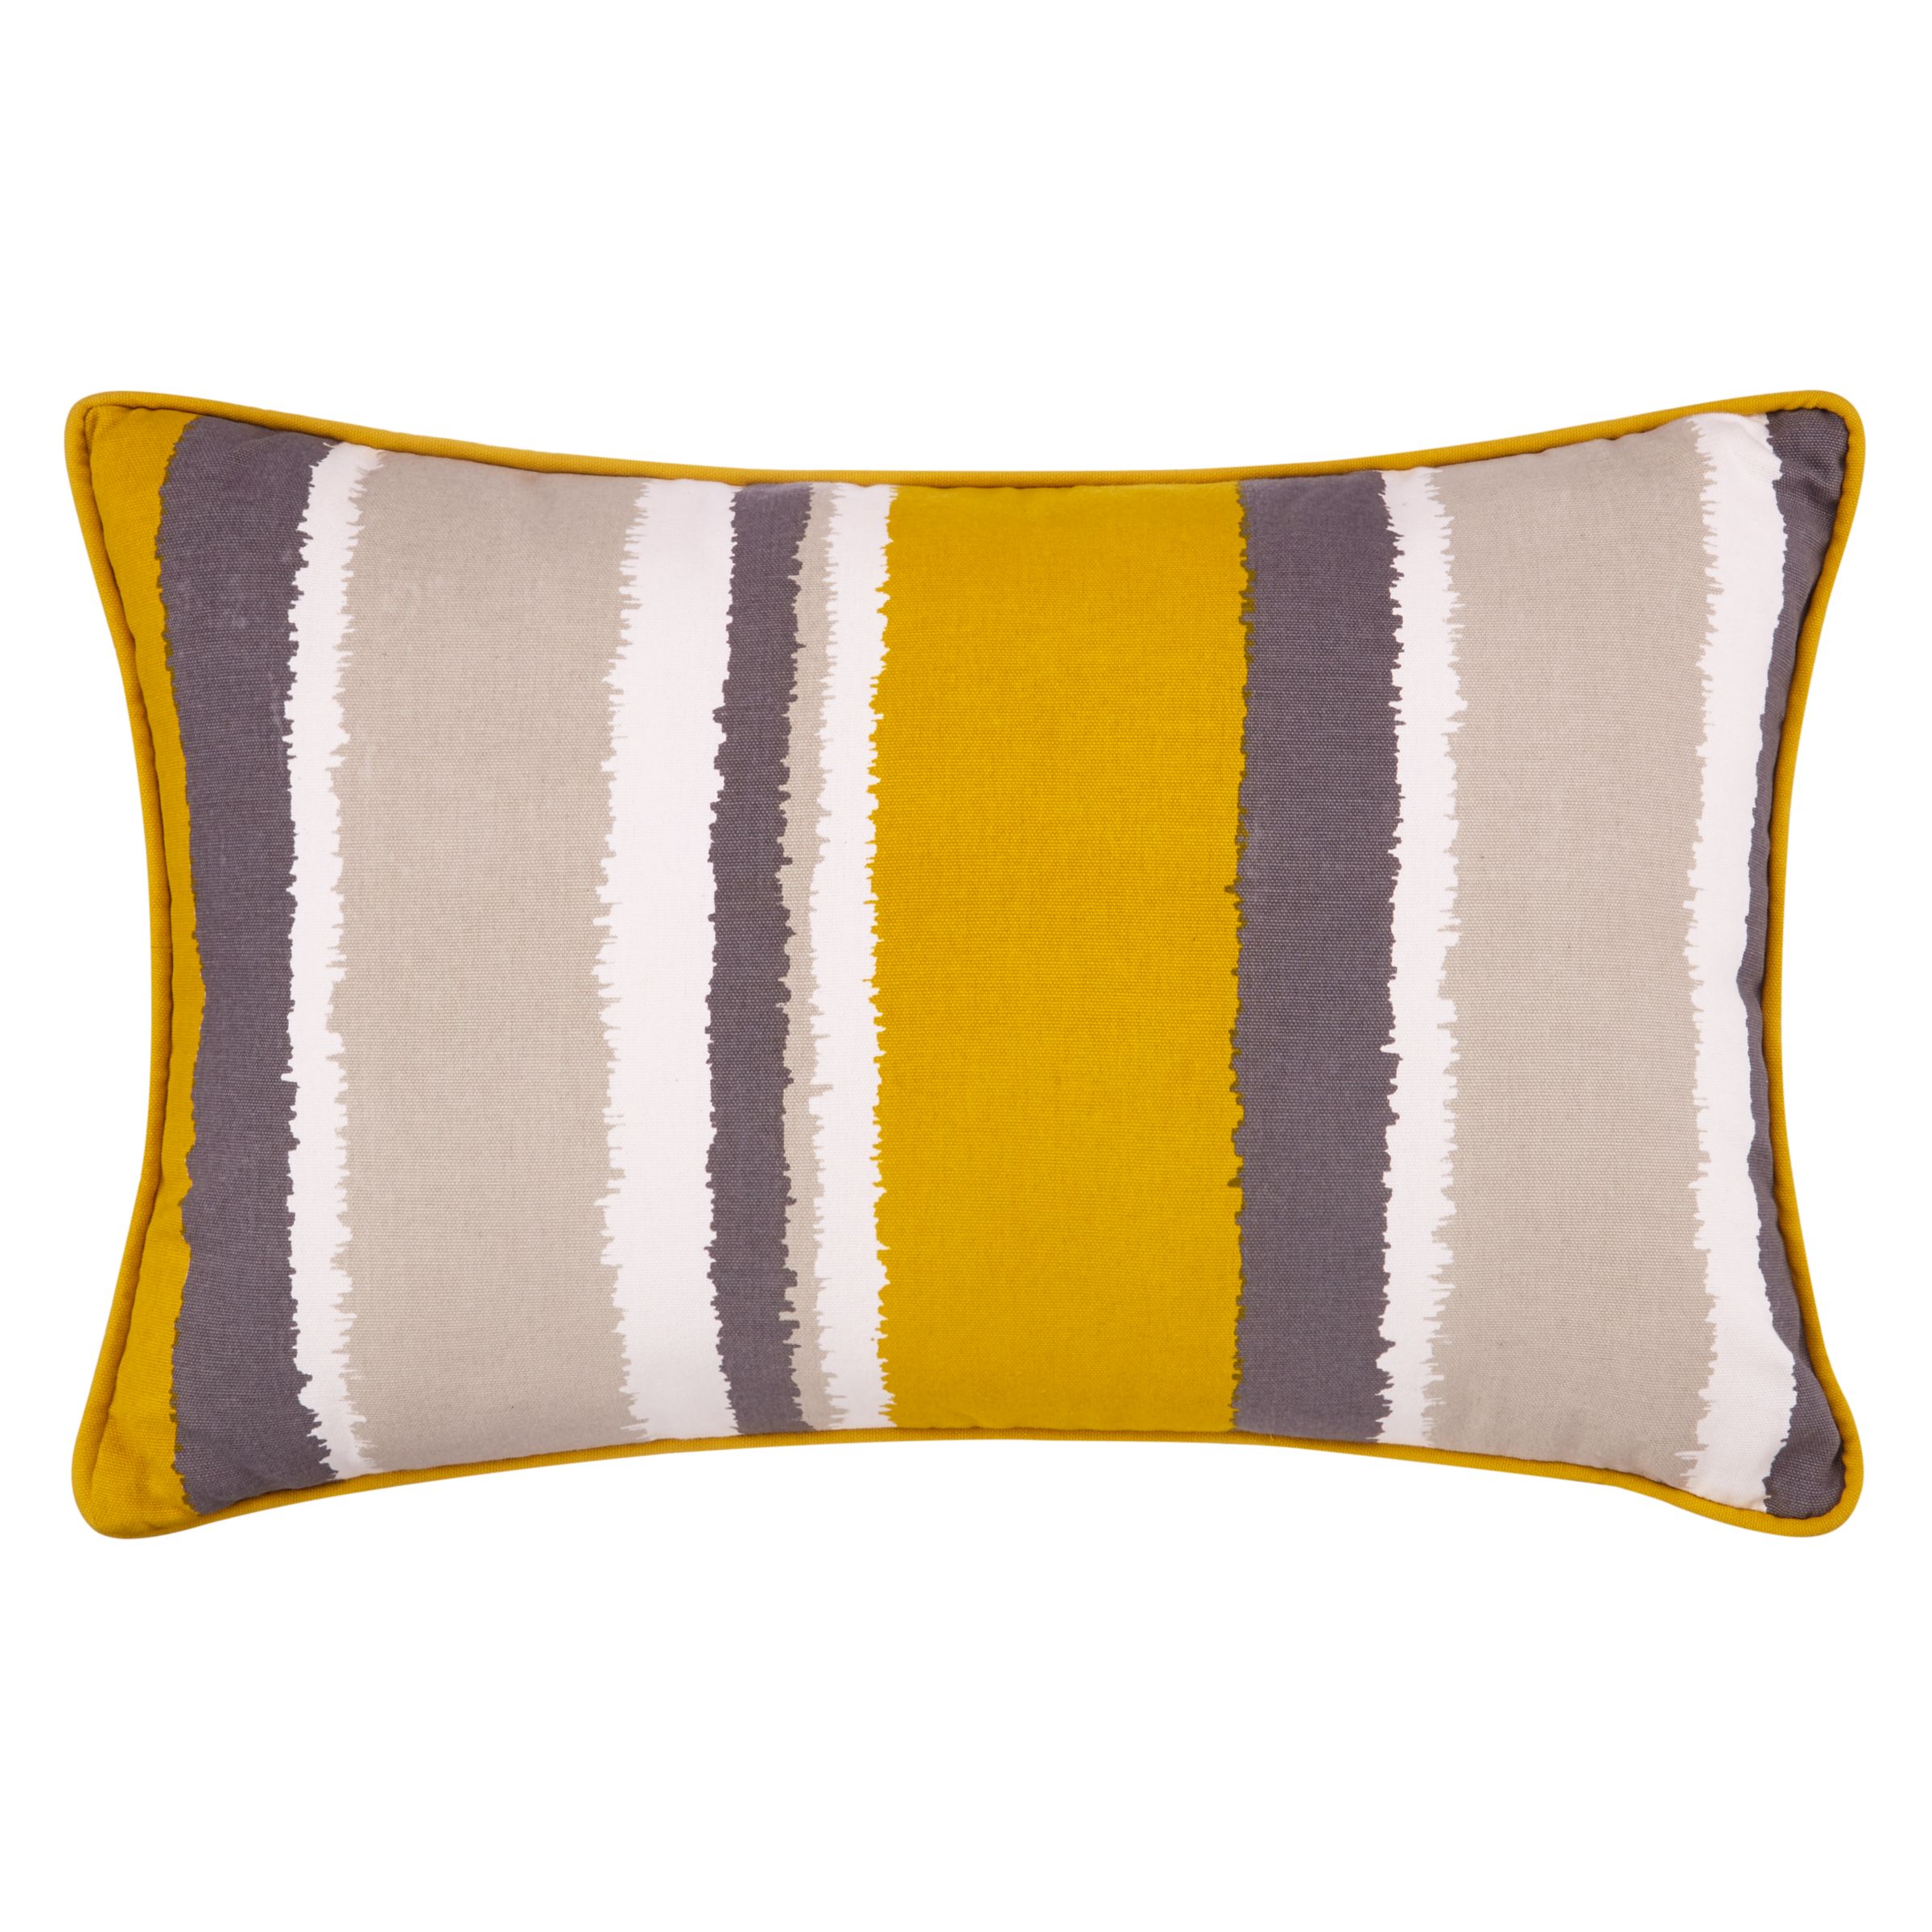 Buy John Lewis Atacama Outdoor Cushion, H55 x W35cm Online at johnlewis.com